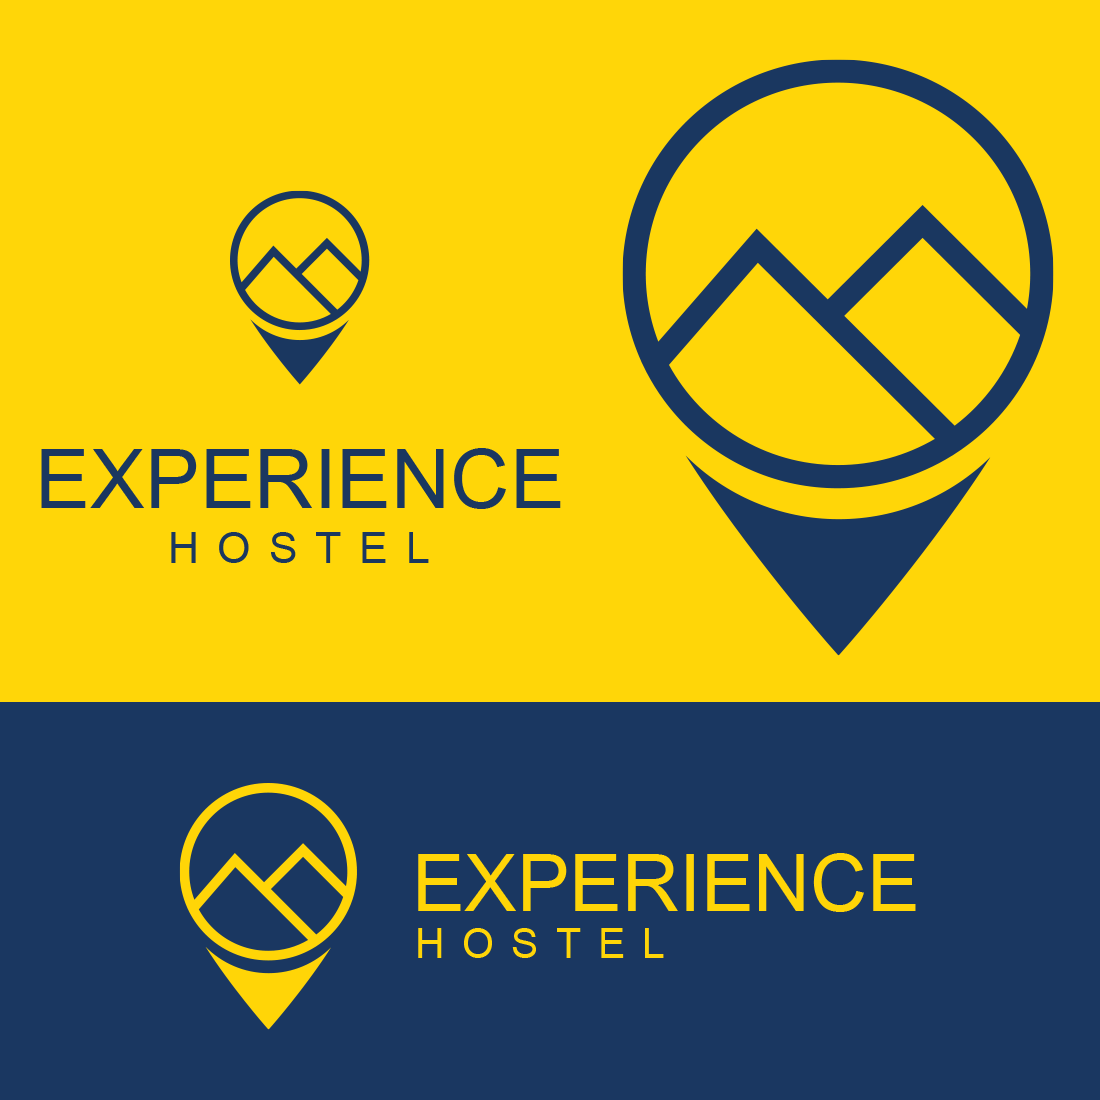 Experience Hostel Logo Design. (Adventure, Nature, Tourist Place) main cover.